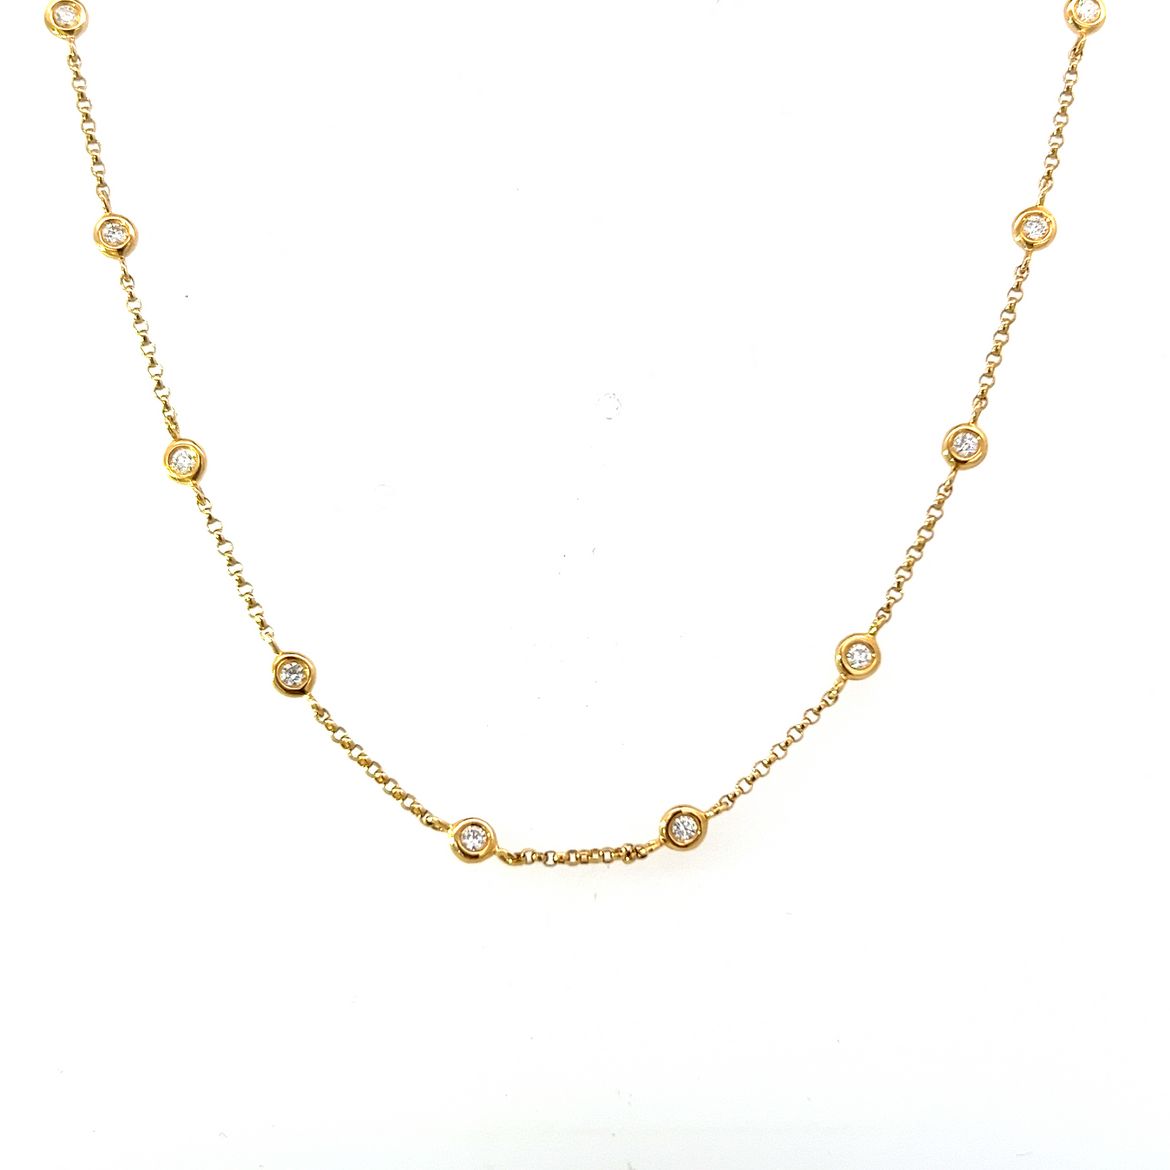 18 Carat Yellow Gold and Diamond Necklace - 0.52 Carats